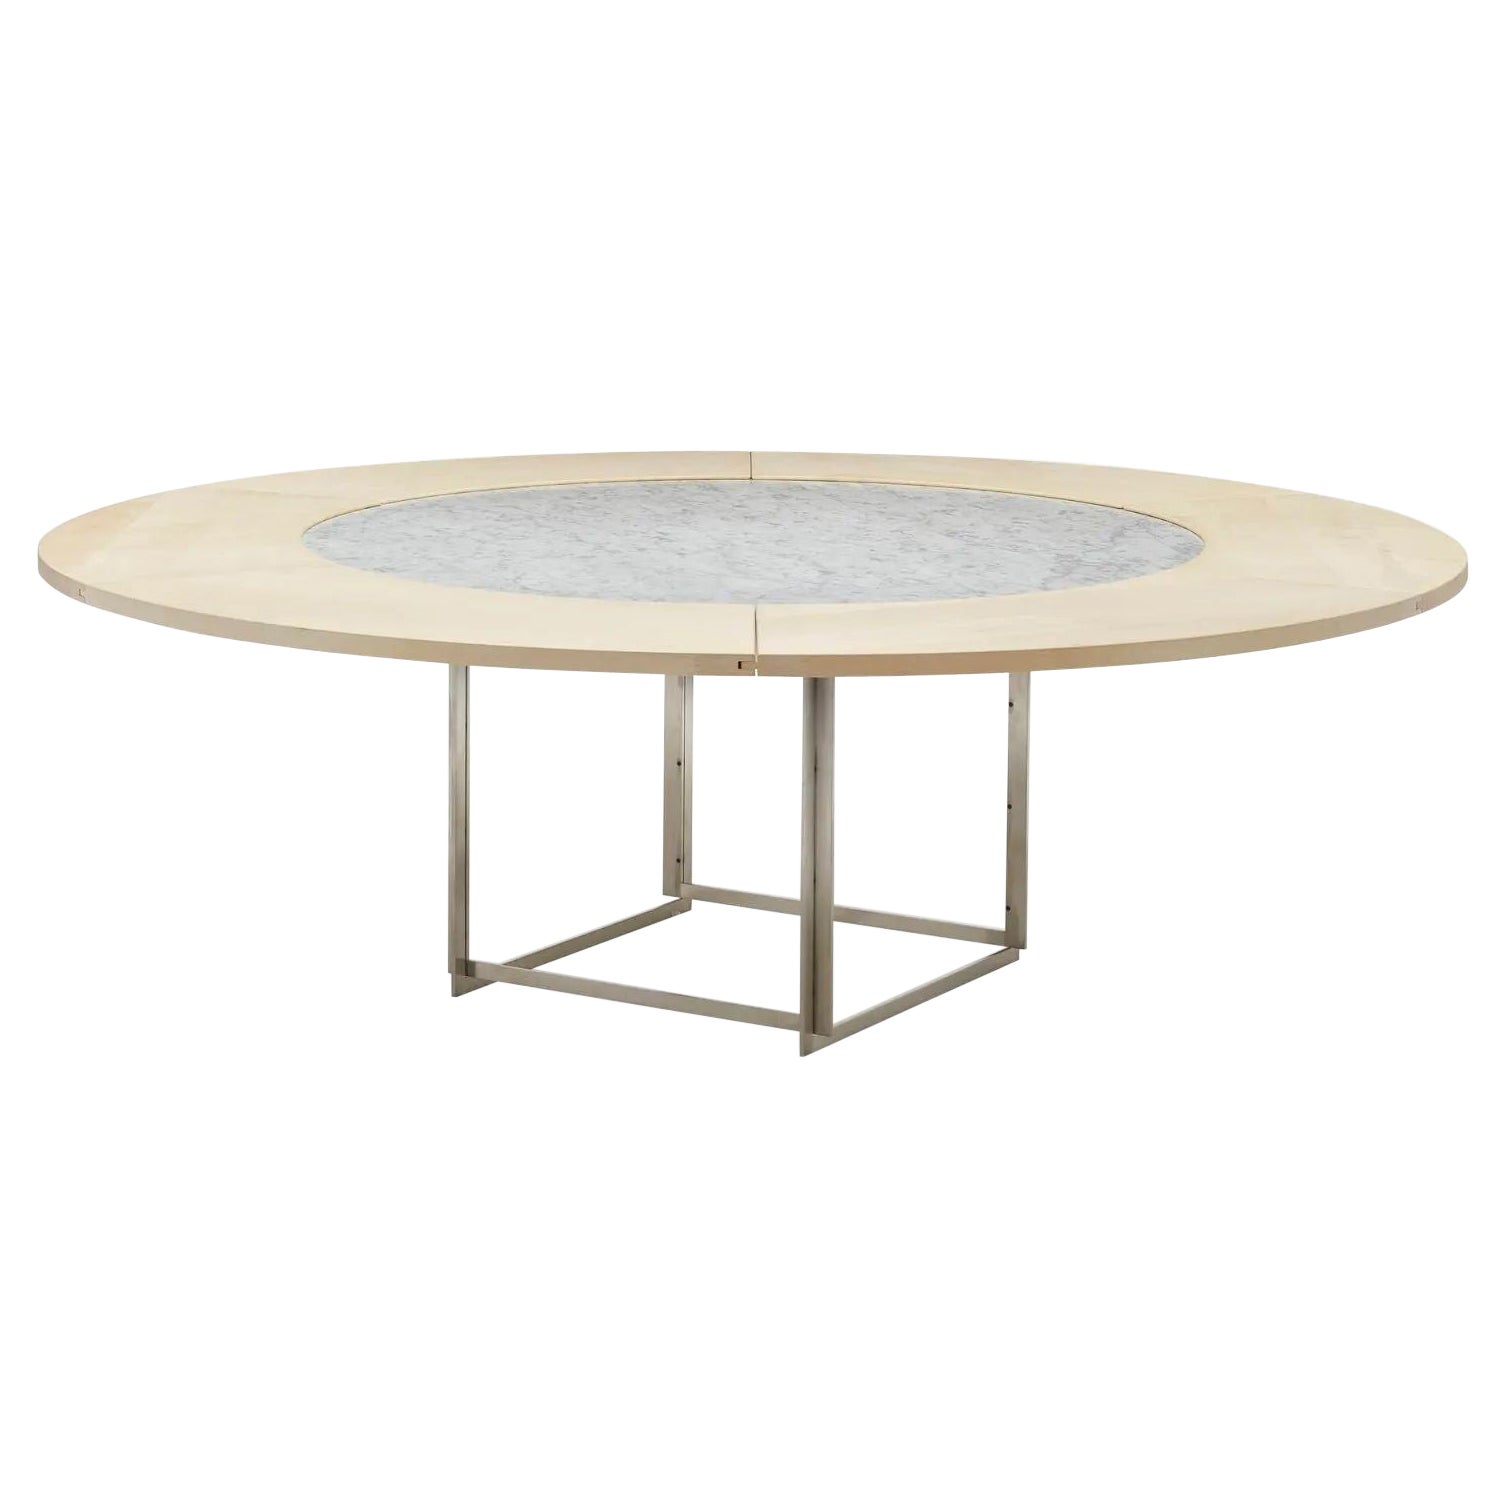 Poul Kjaerholm Mid-Century Modern PK-54 Dining Table, Marble, Maple, Steel, 2011 For Sale